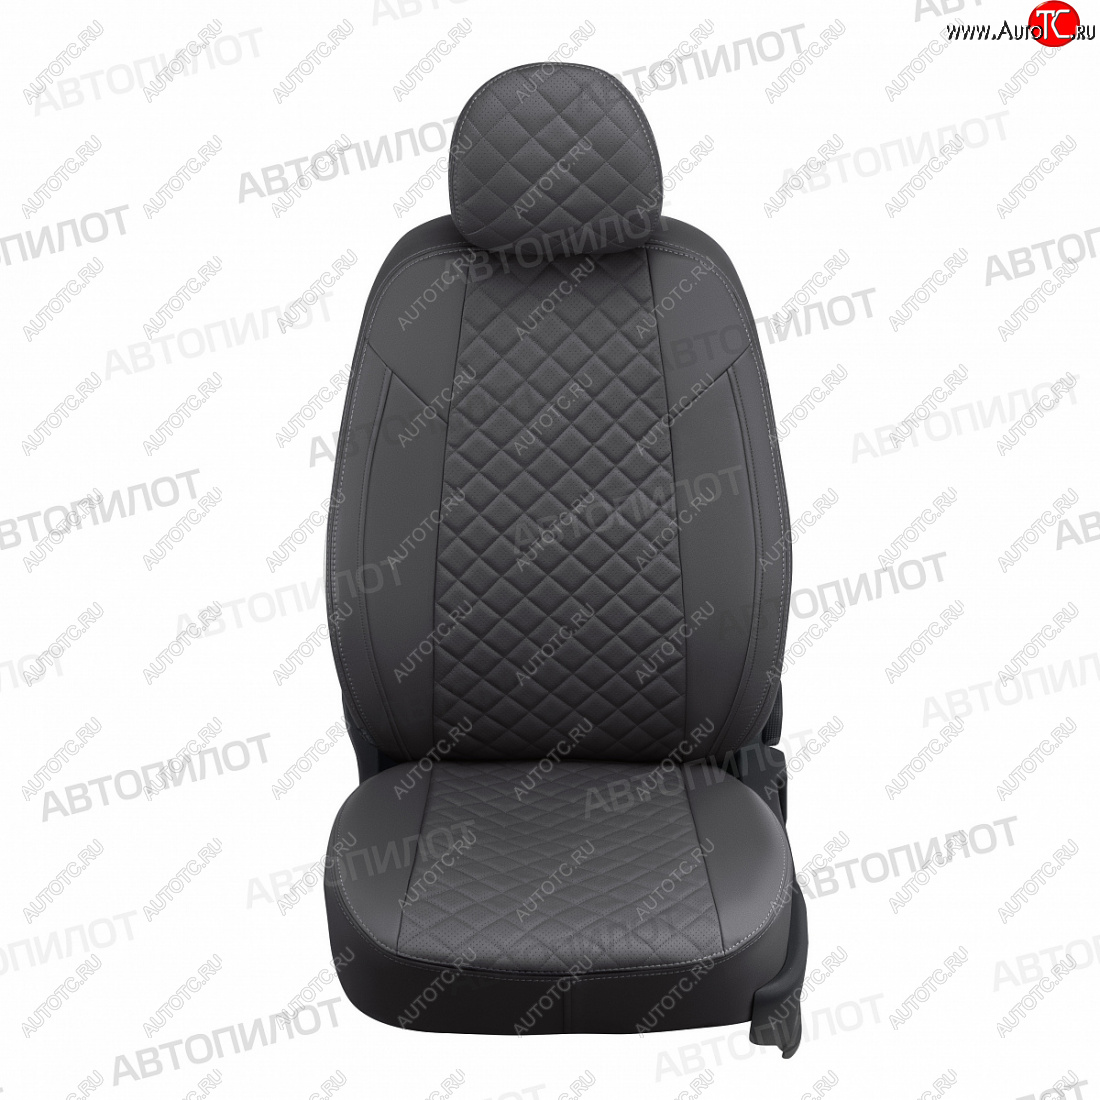 7 799 р. Чехлы сидений (экокожа, зад. сид. 40/60) Автопилот Ромб  Hyundai Getz  TB (2002-2010) (темно-серый)